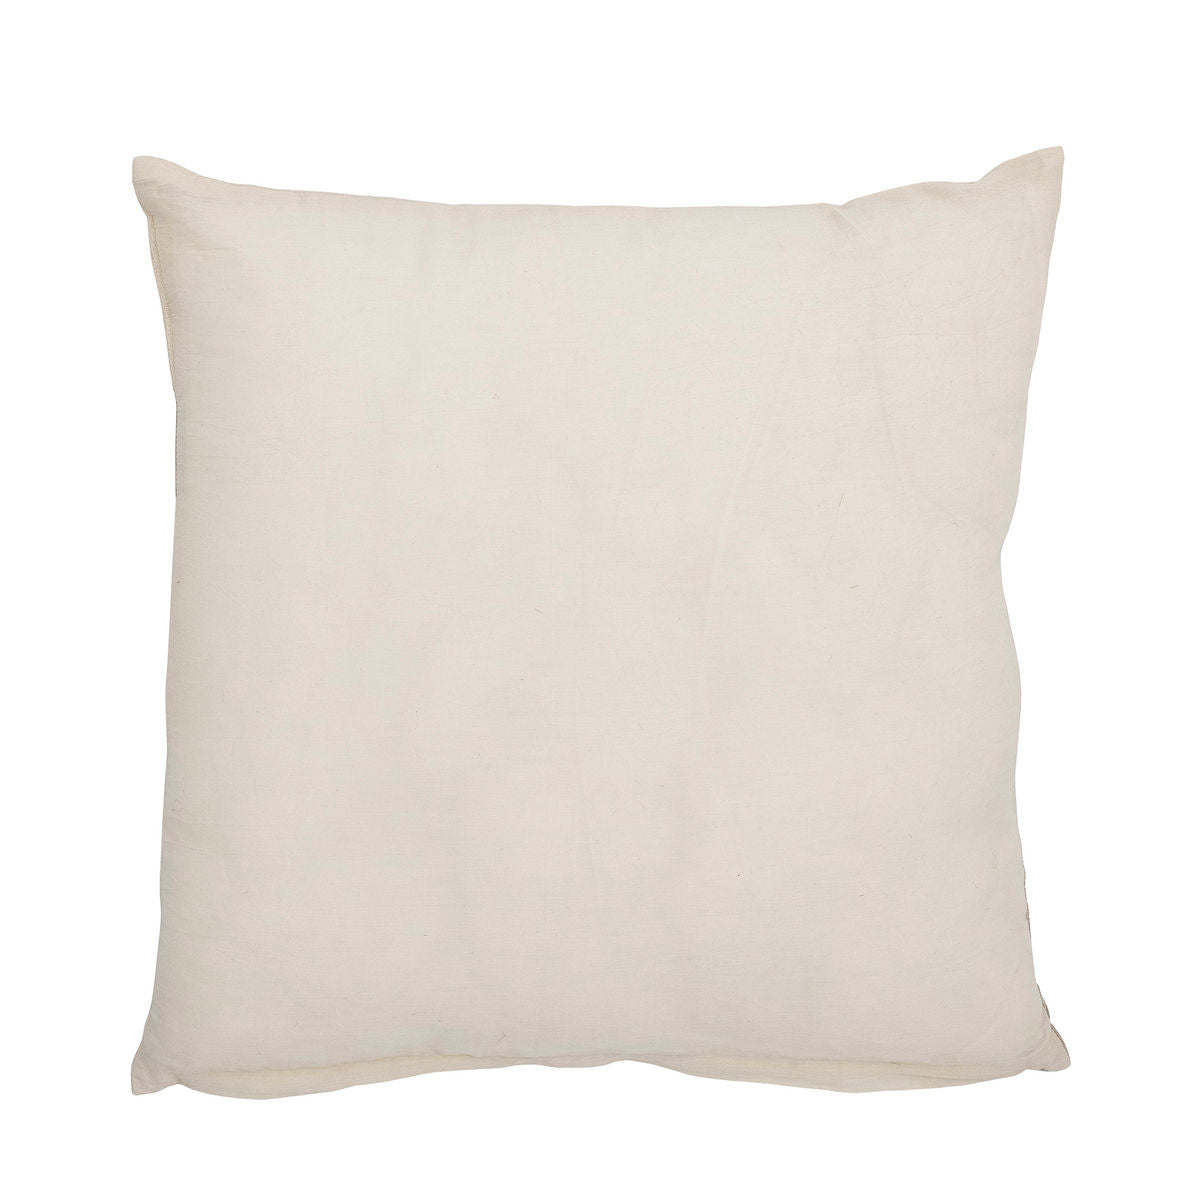 Bloomingville maje pillow, gray, cotton